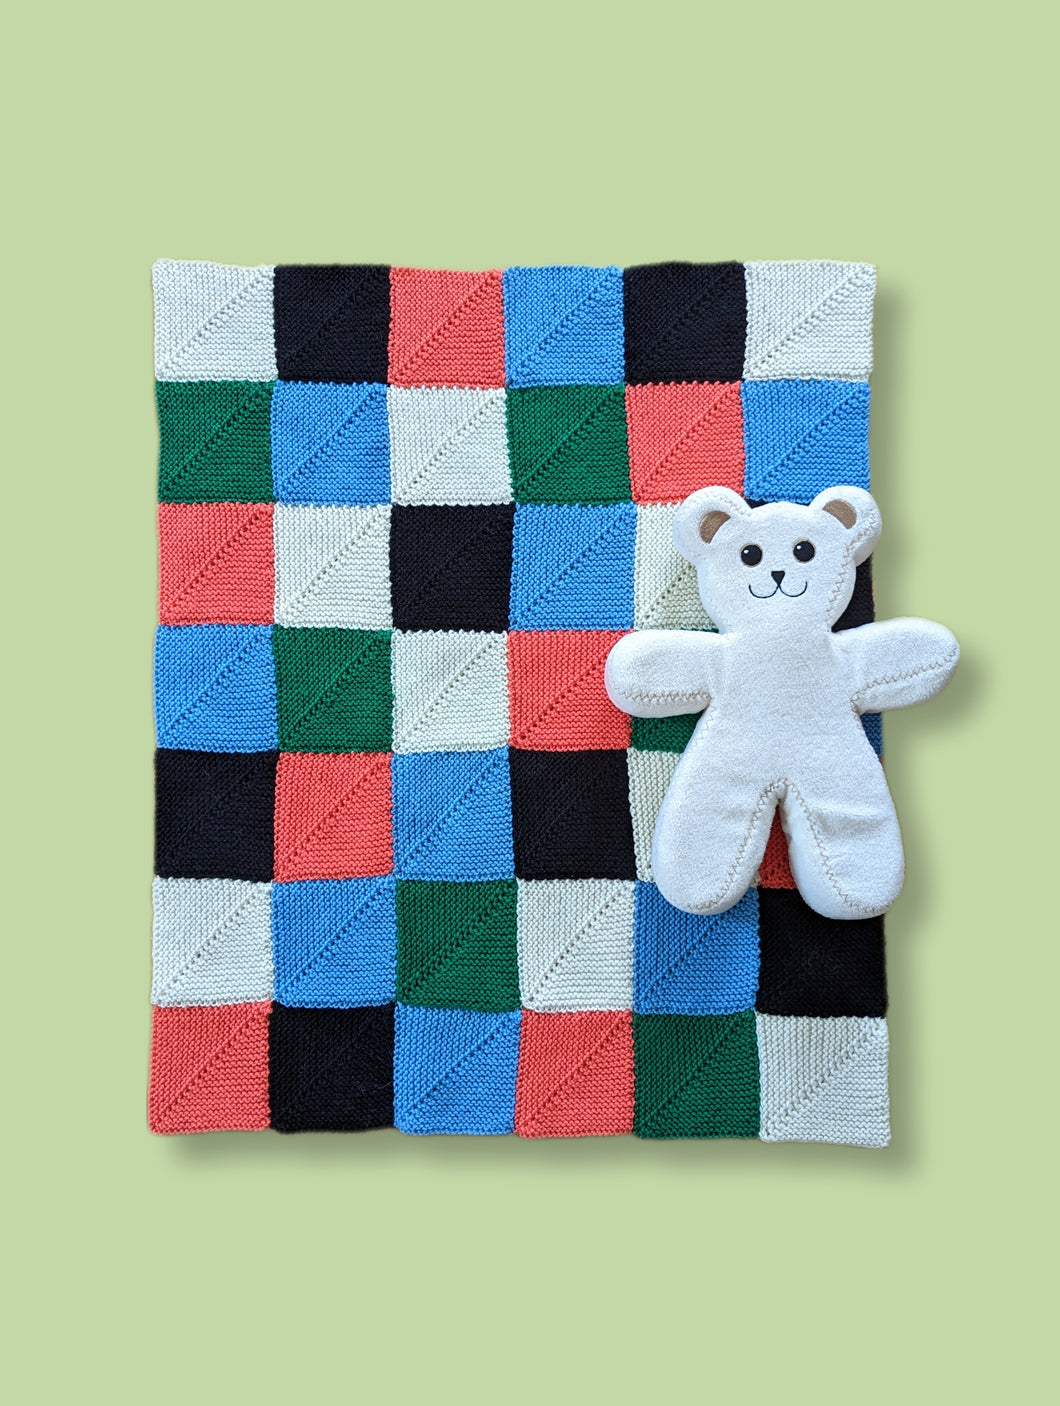 Knitting Pattern - Mitered Square Baby Blanket